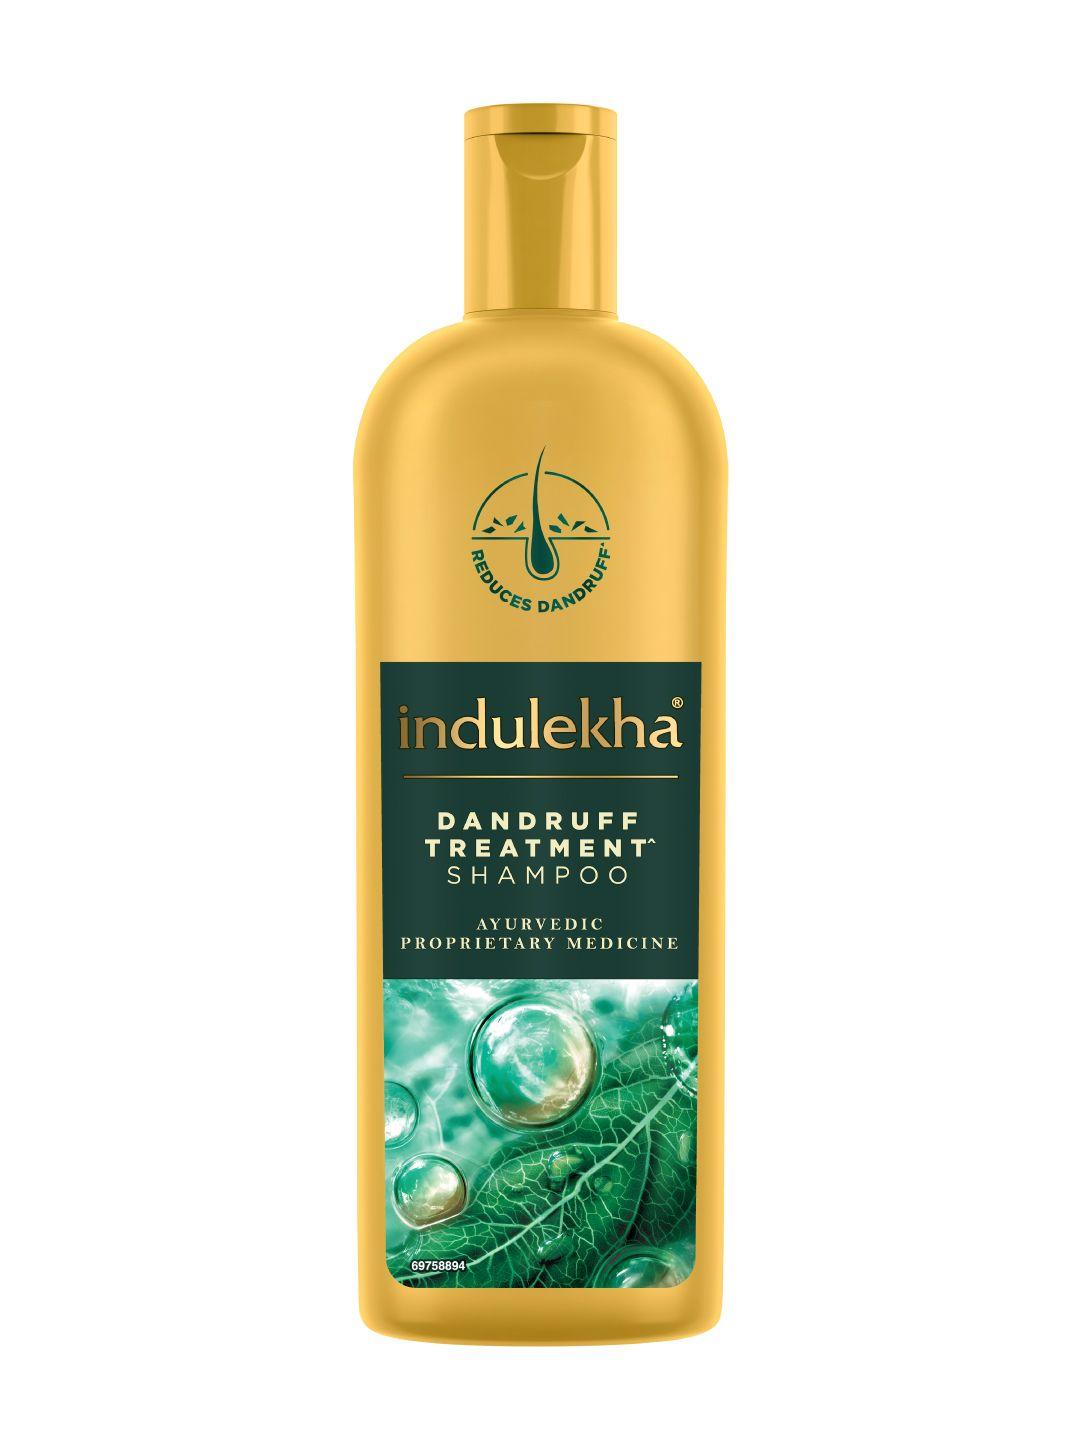 indulekha dandruff treatment shampoo with pudina sattva & amla - 340ml